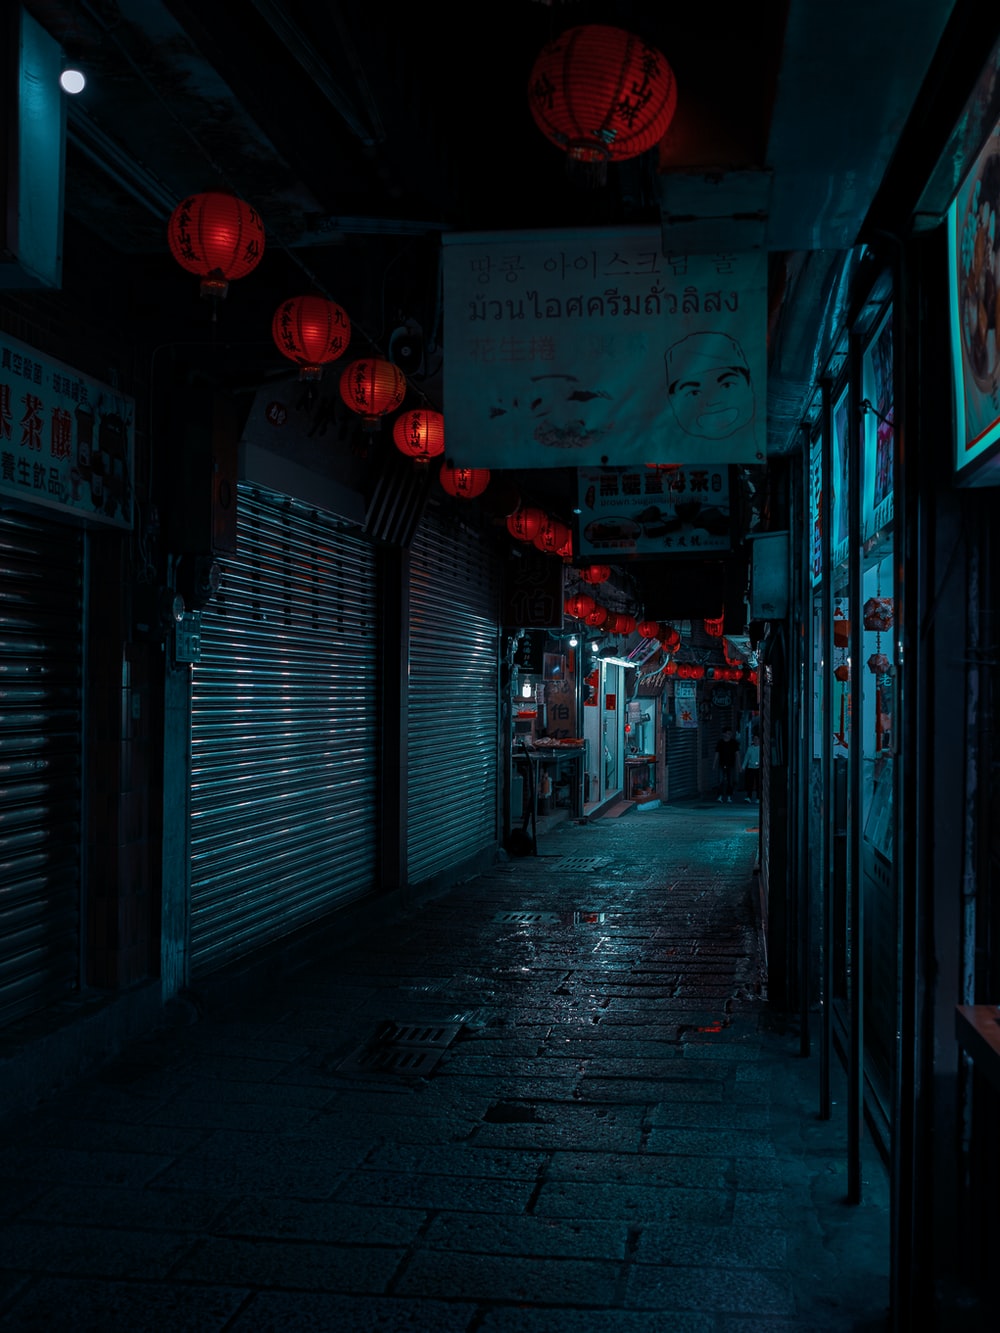 Dark Street Picture. Download Free Image